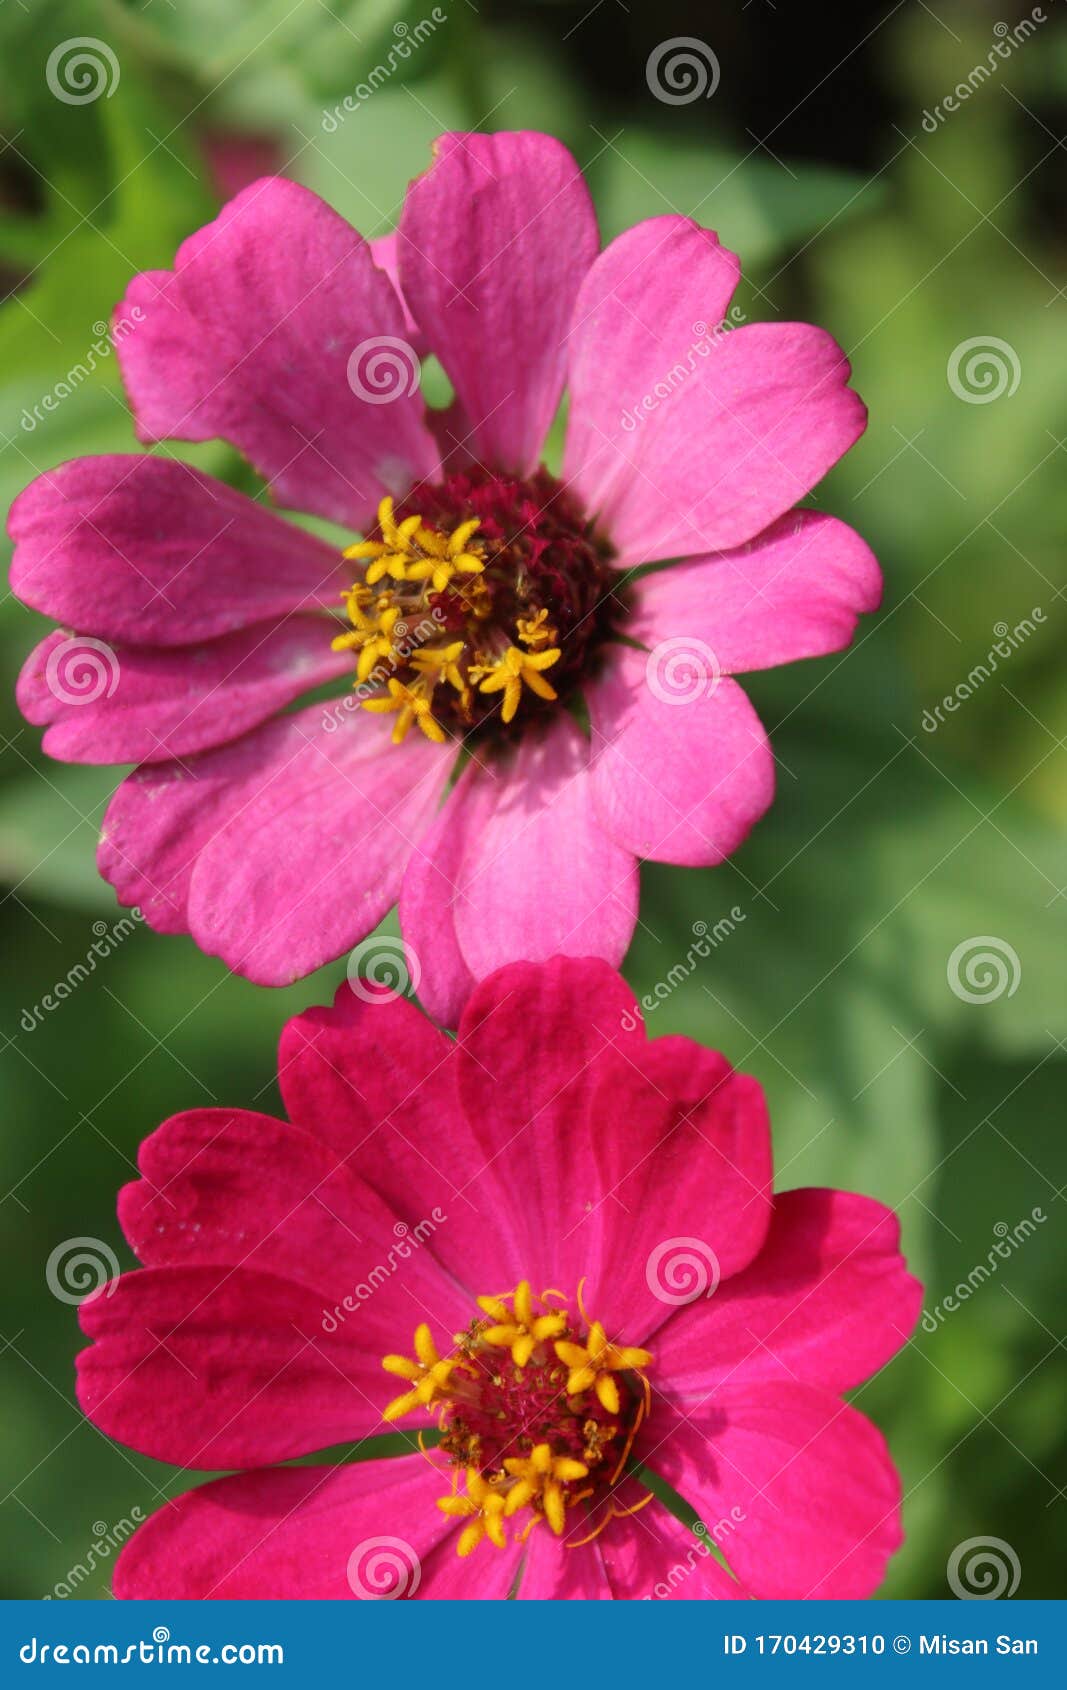 Beautiful Zinnia Flower From Indonesia Stock Photo Image Of Found Zinnia 170429310